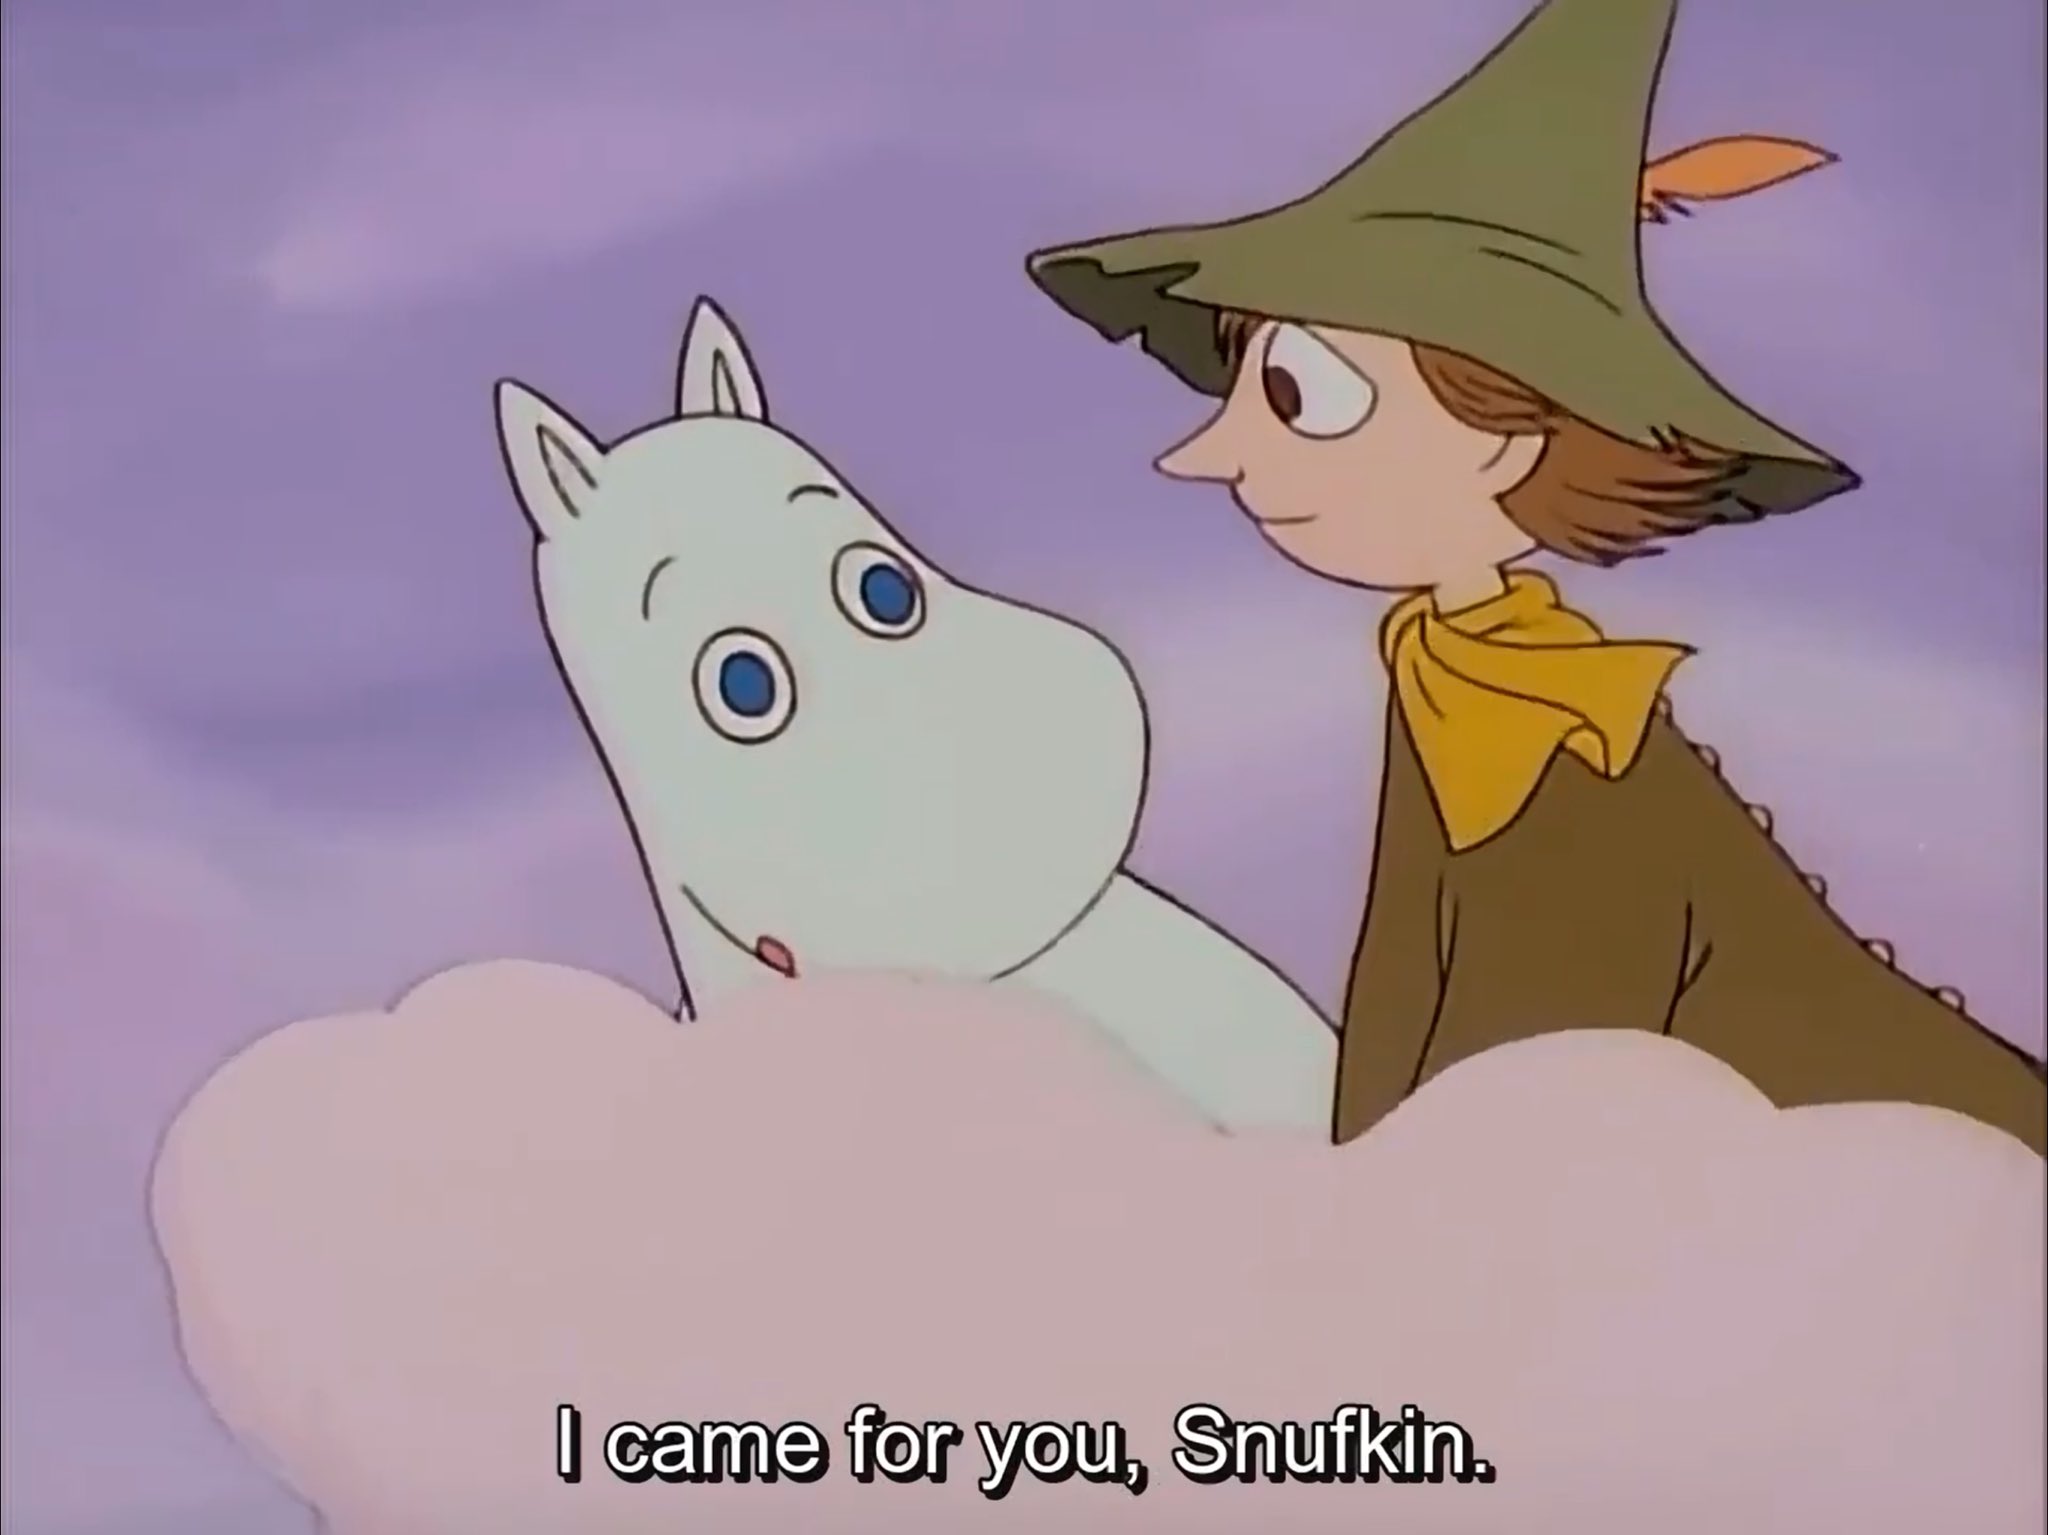 Moomin and Snufkin